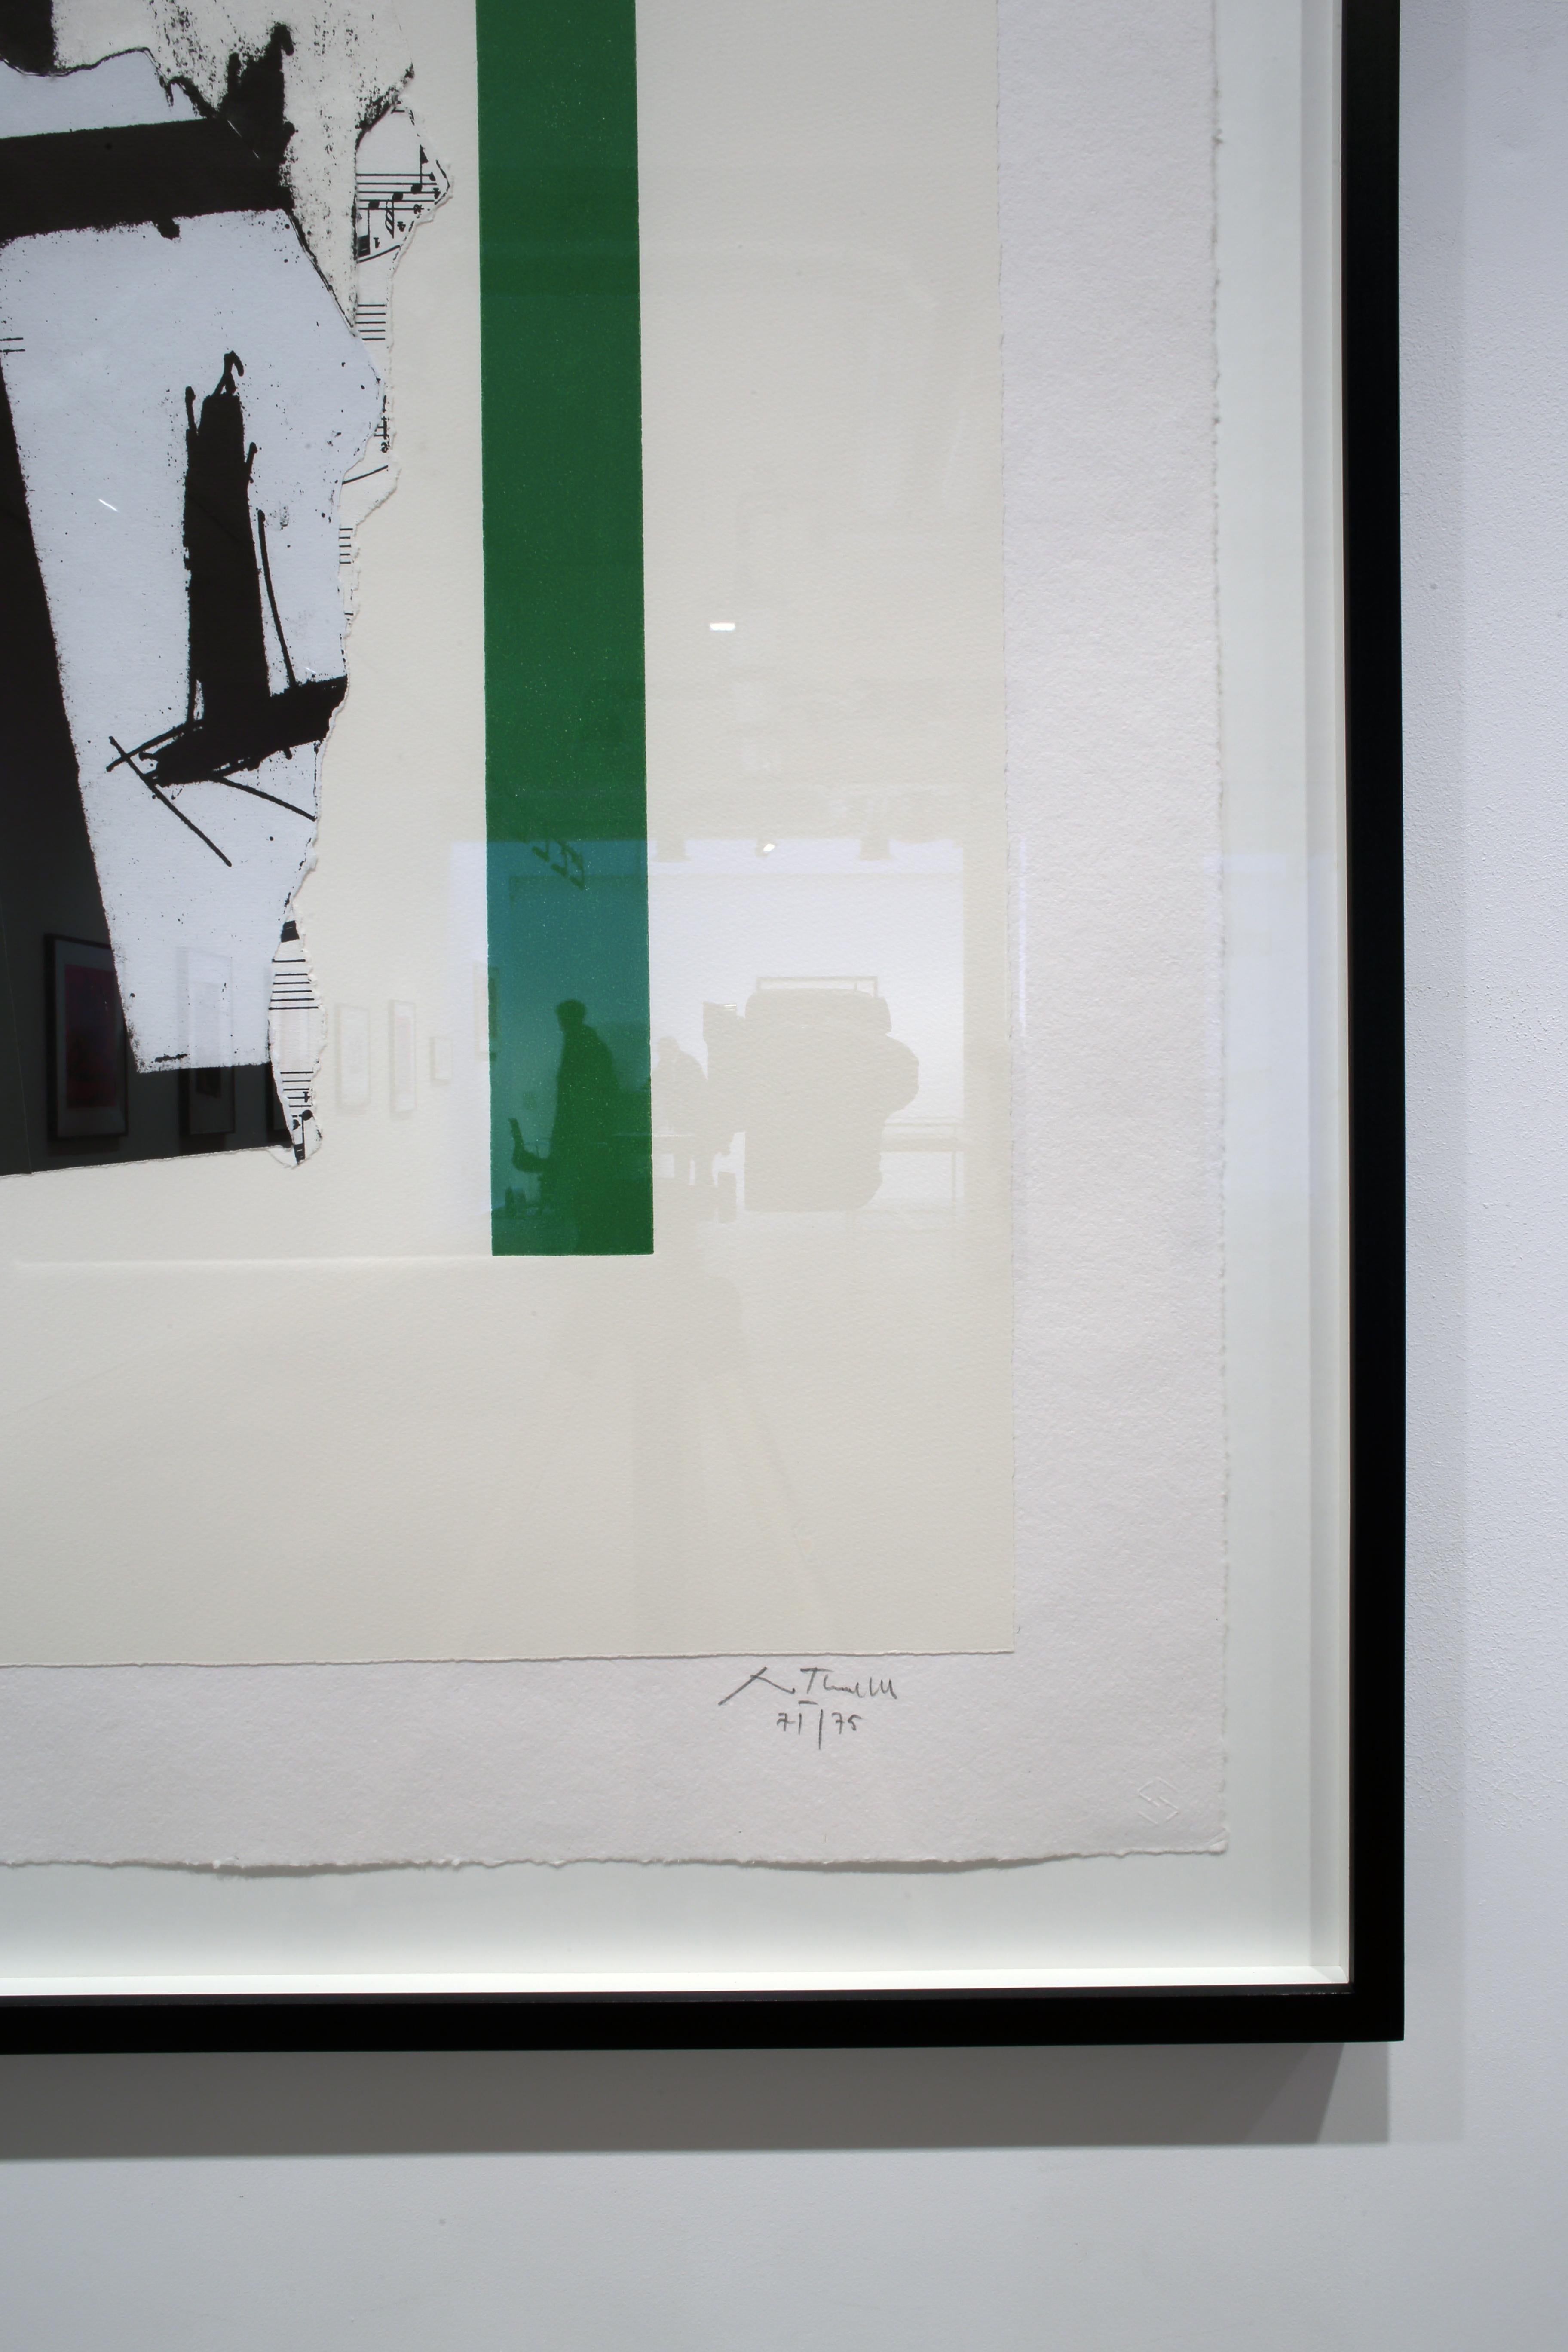 Rober Motherwell
En blanc avec rayures vertes
1987
Lithographie, impression en relief, gaufrage et collage
86.4 x 61  cms (34 x 24 ins)